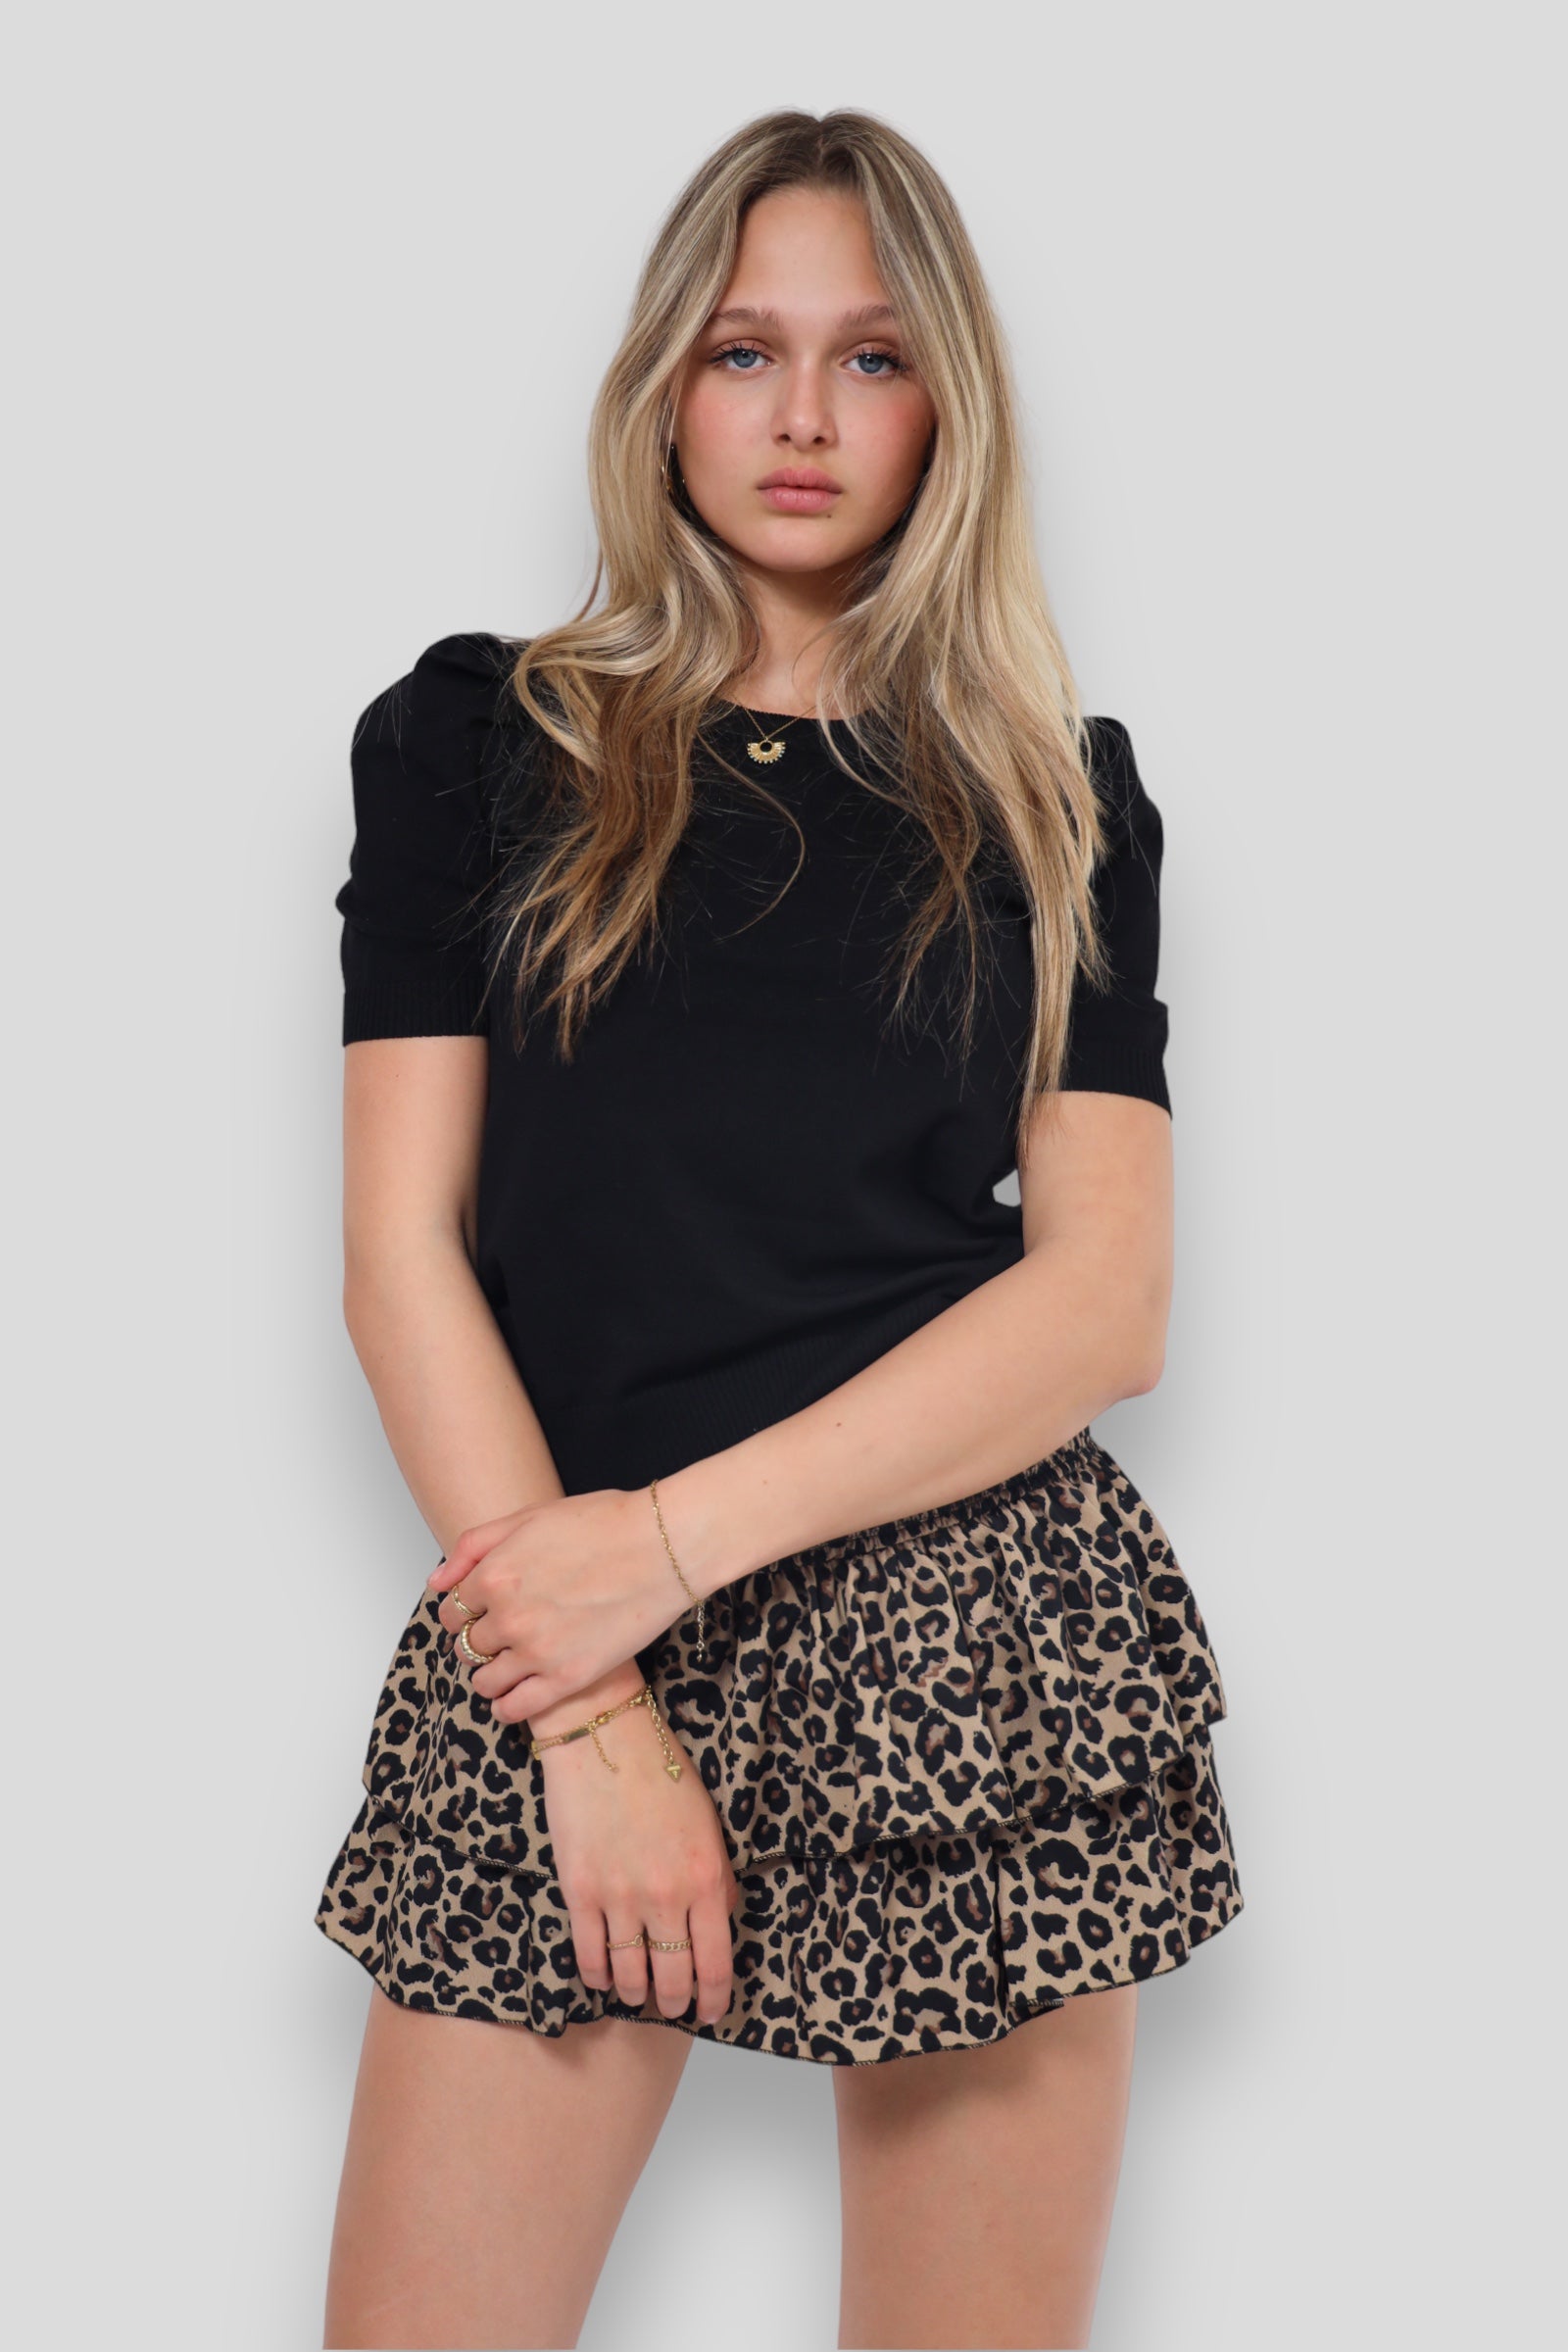 “Leopard” skirt